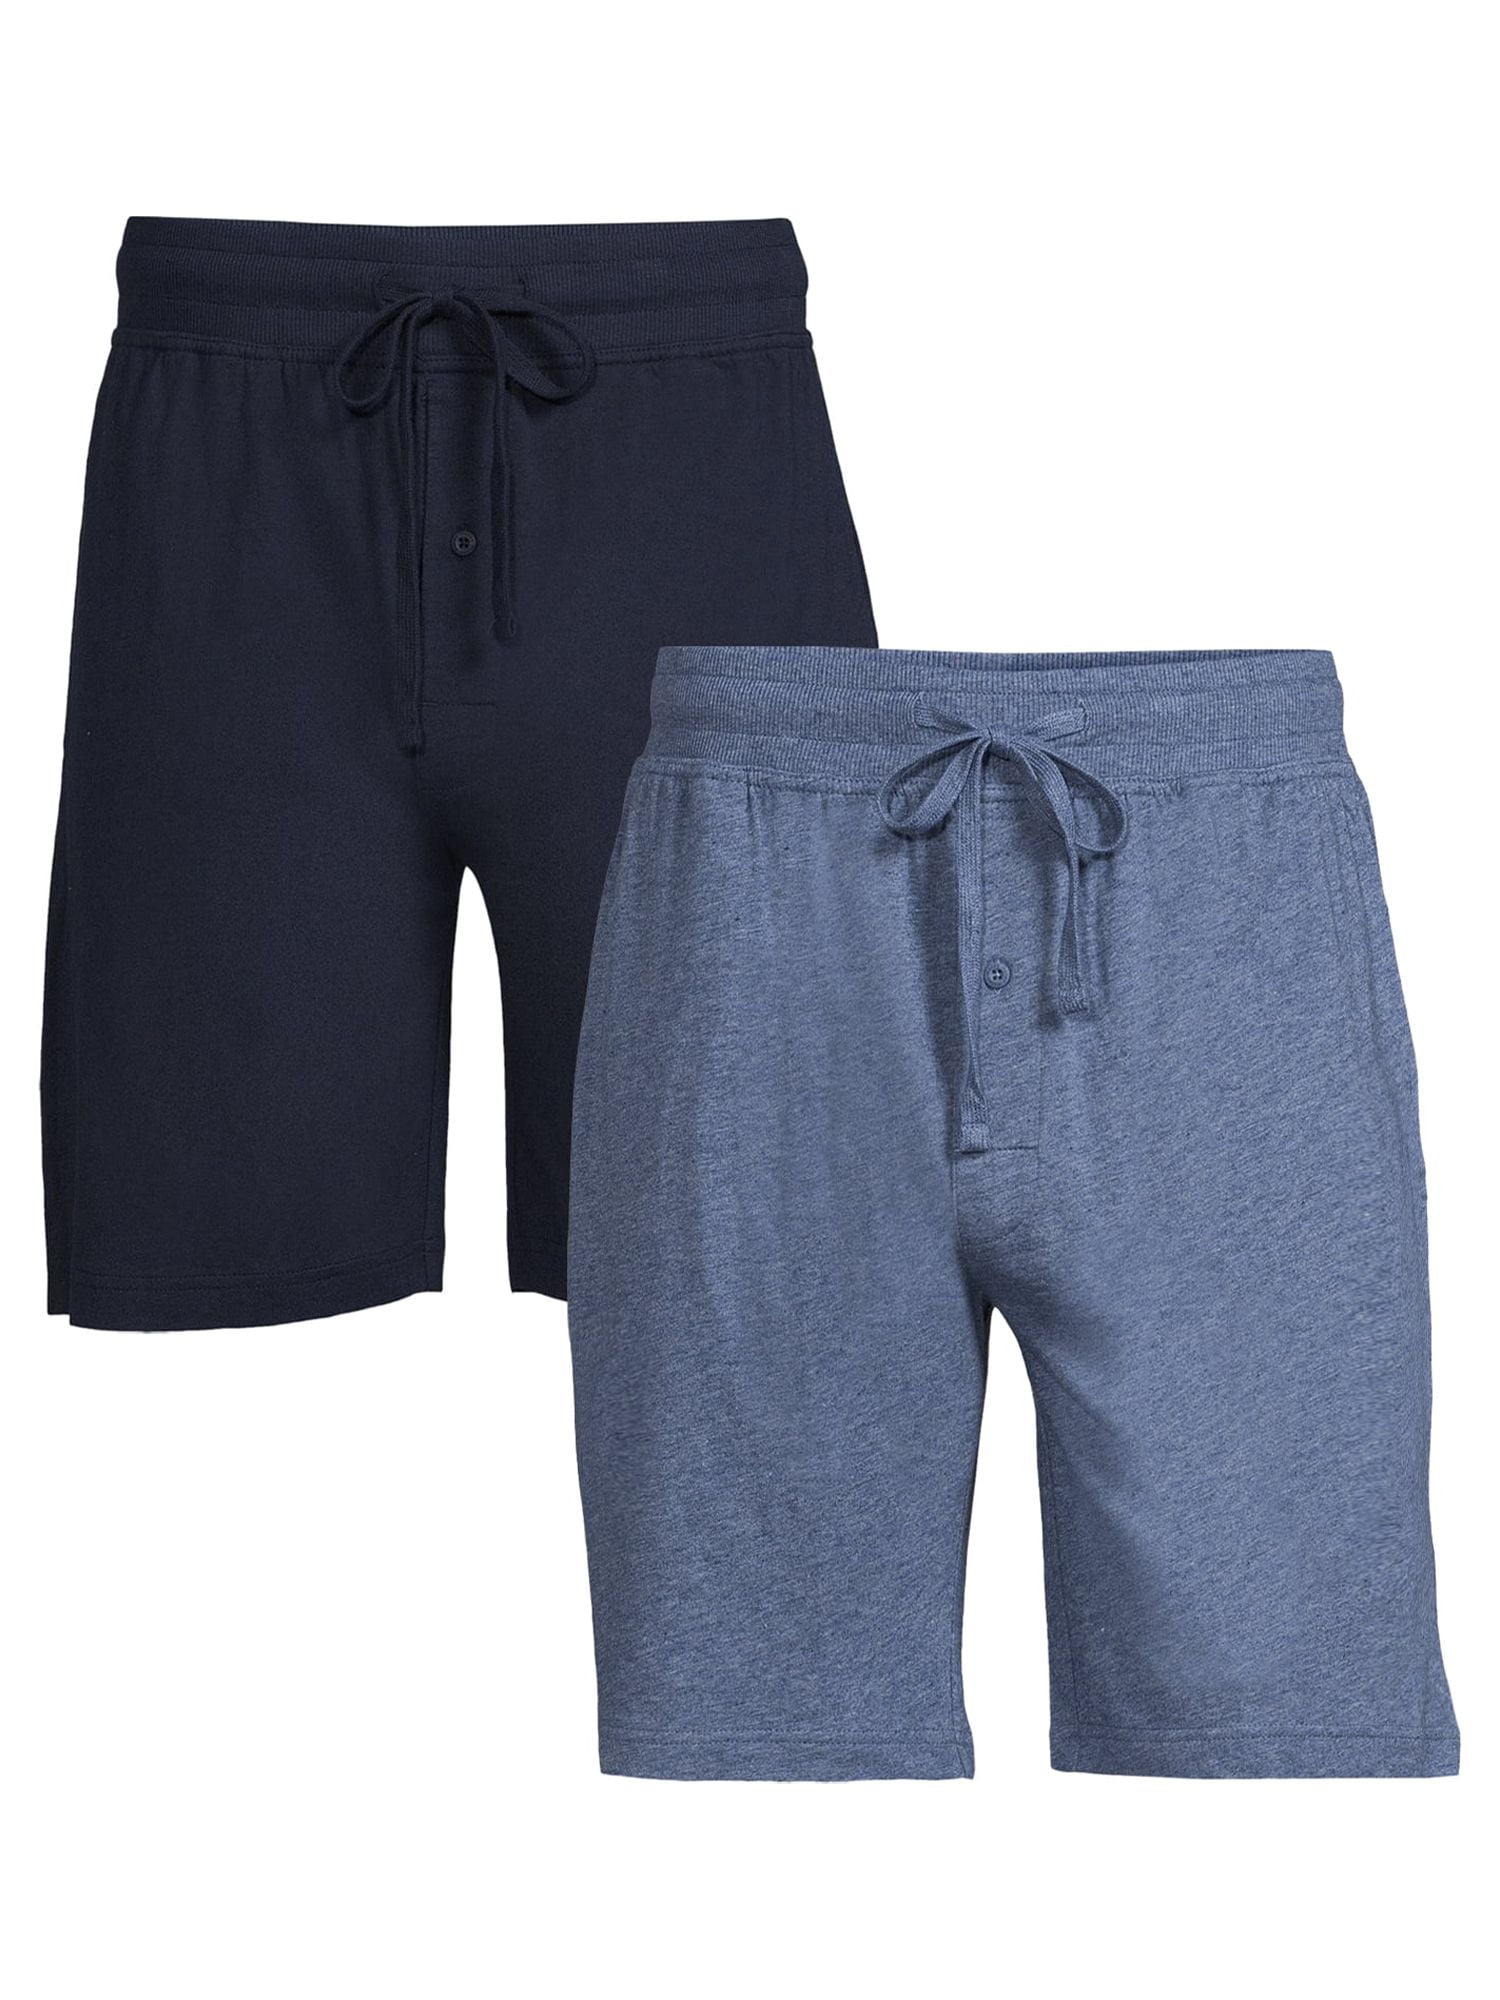 Hanes Men's Cotton Modal ComfortFlexFit Sleep Shorts, 2-Pack - Walmart.com